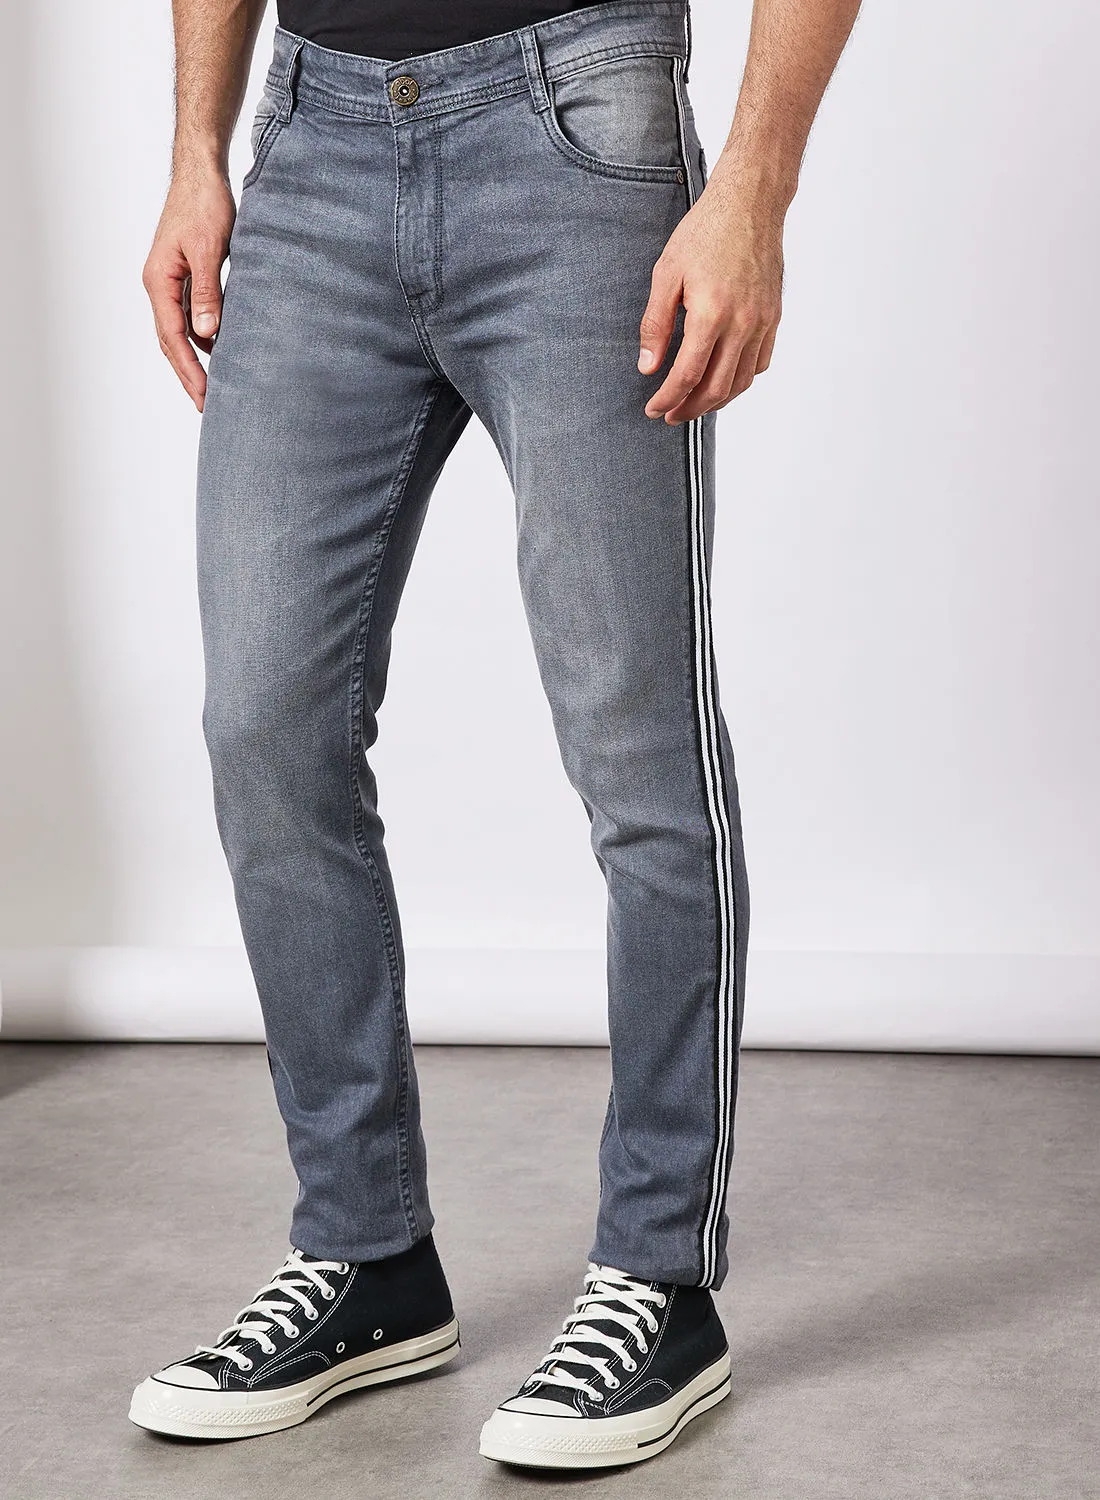 ABOF Slim Fit Jeans Grey1